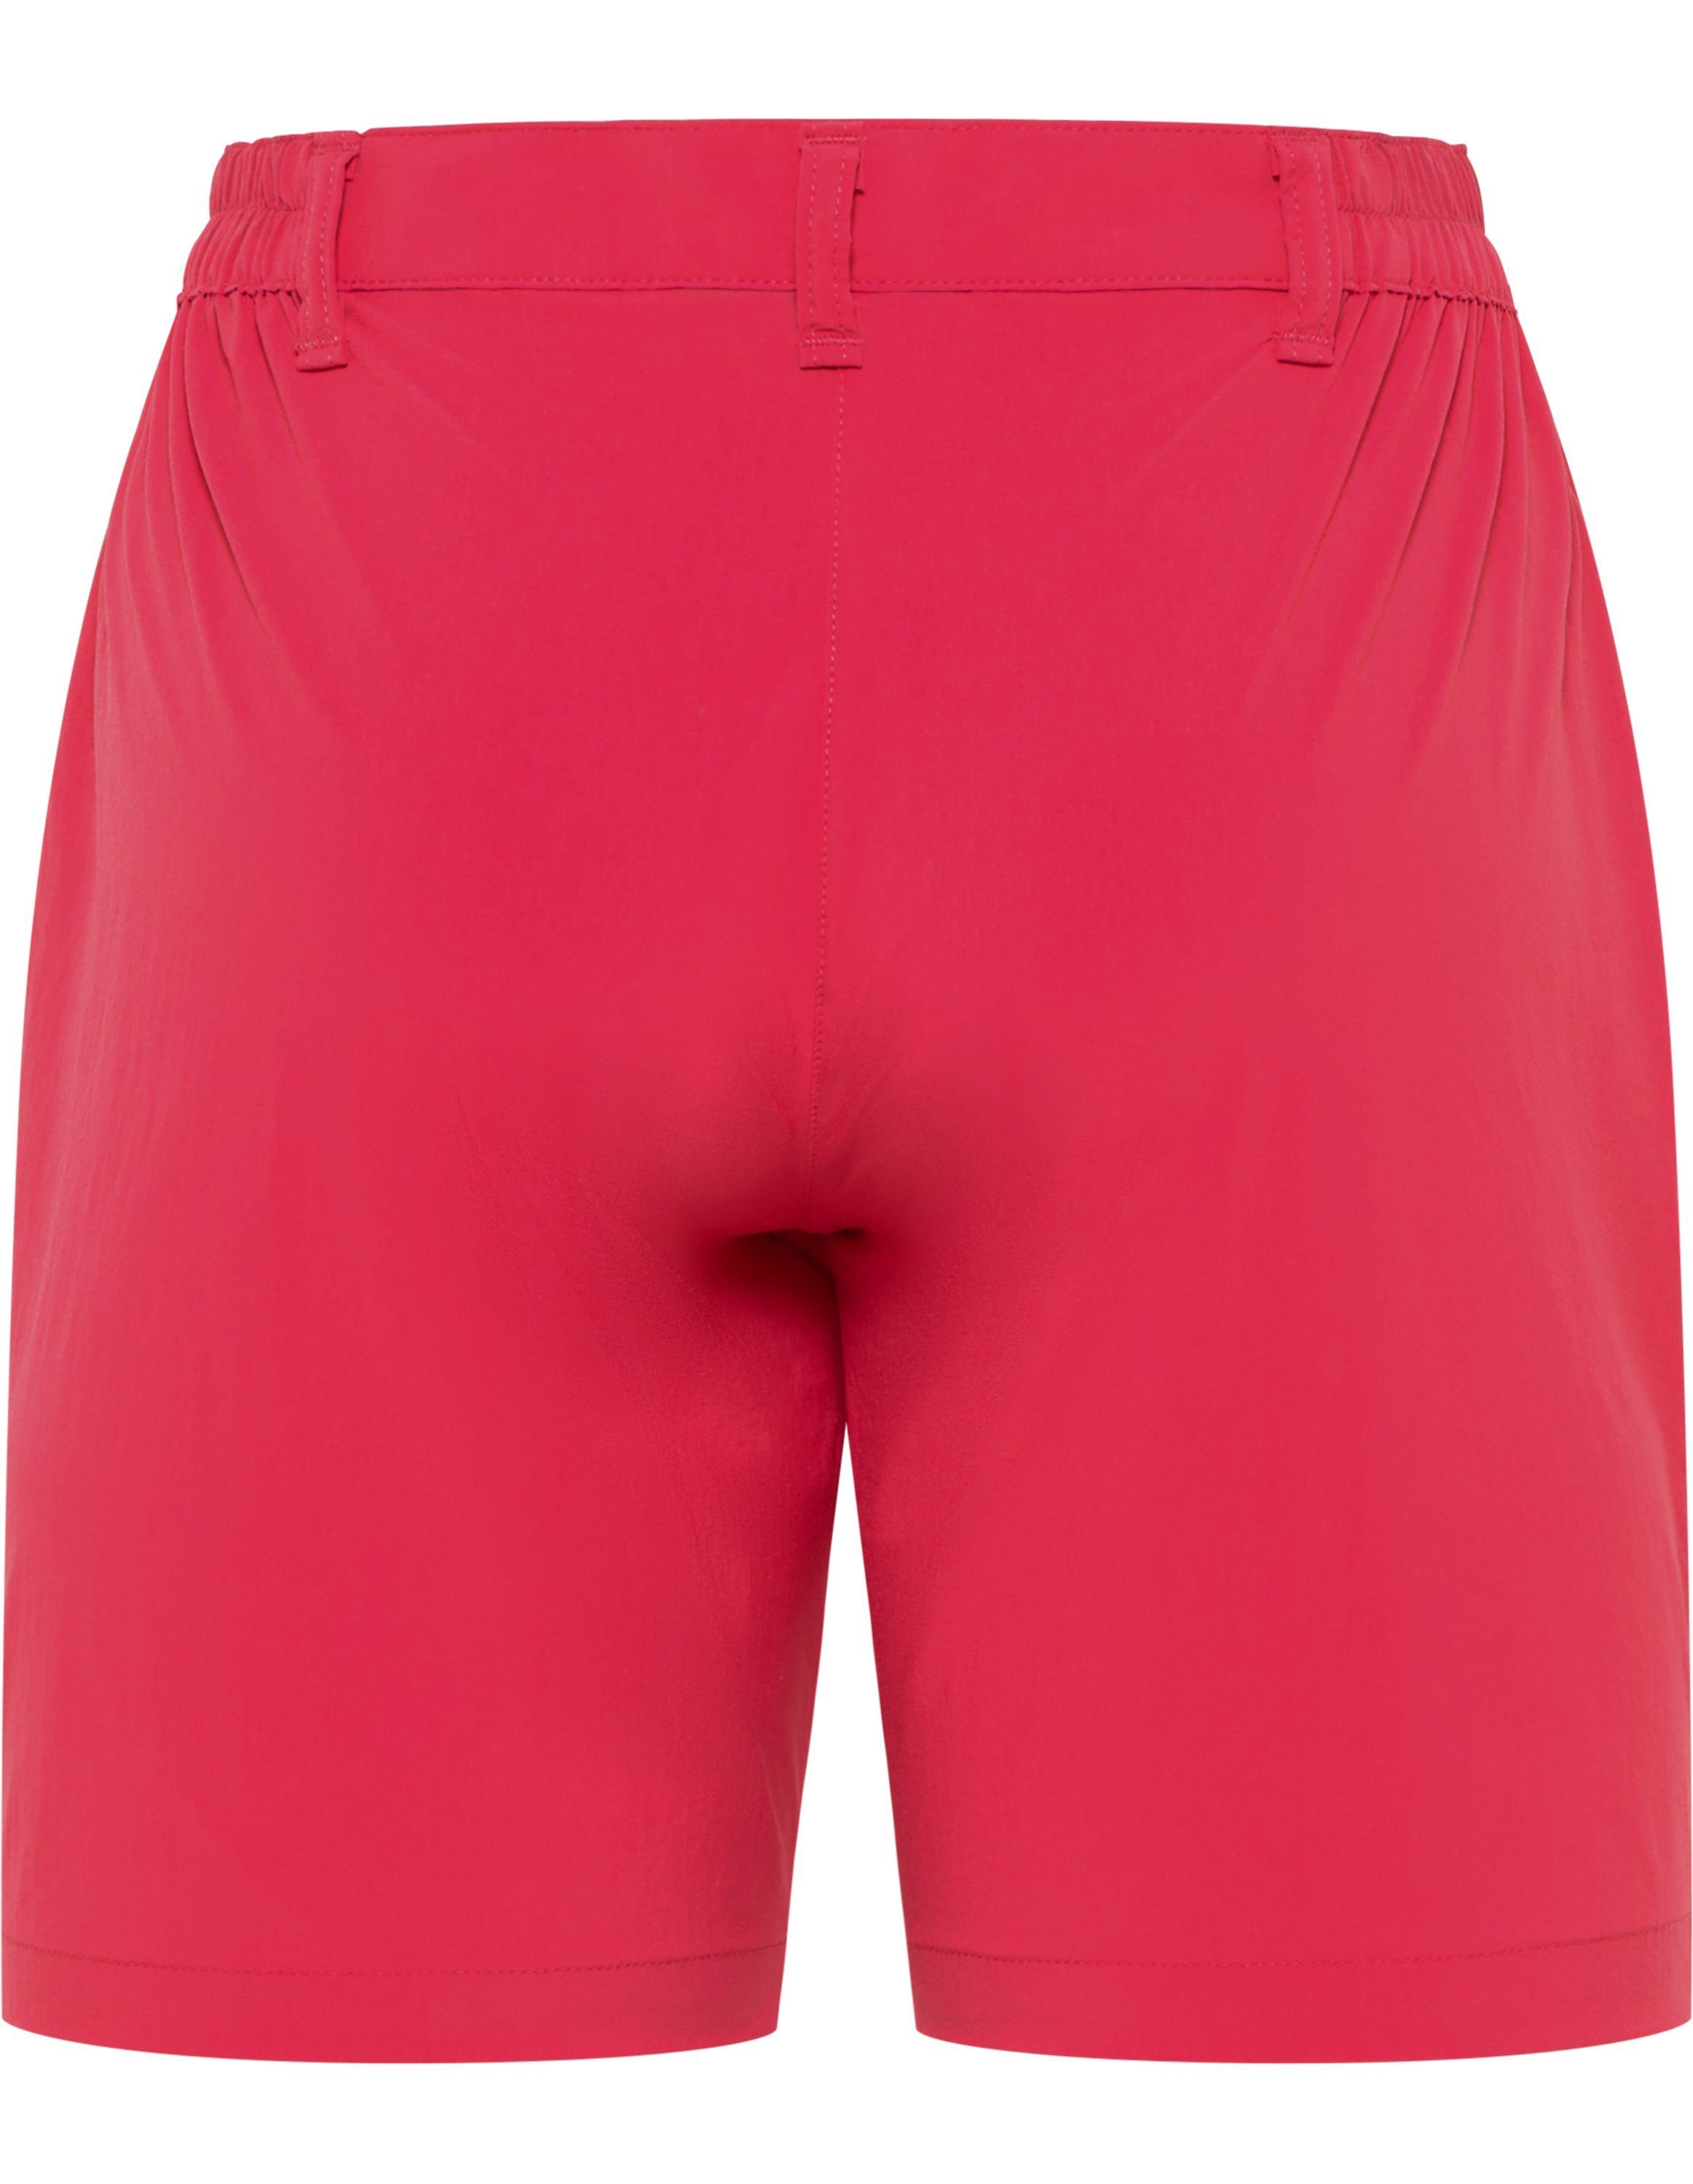 rose red Trainingsshorts Hot-Sportswear Kurze Ordesa Hose